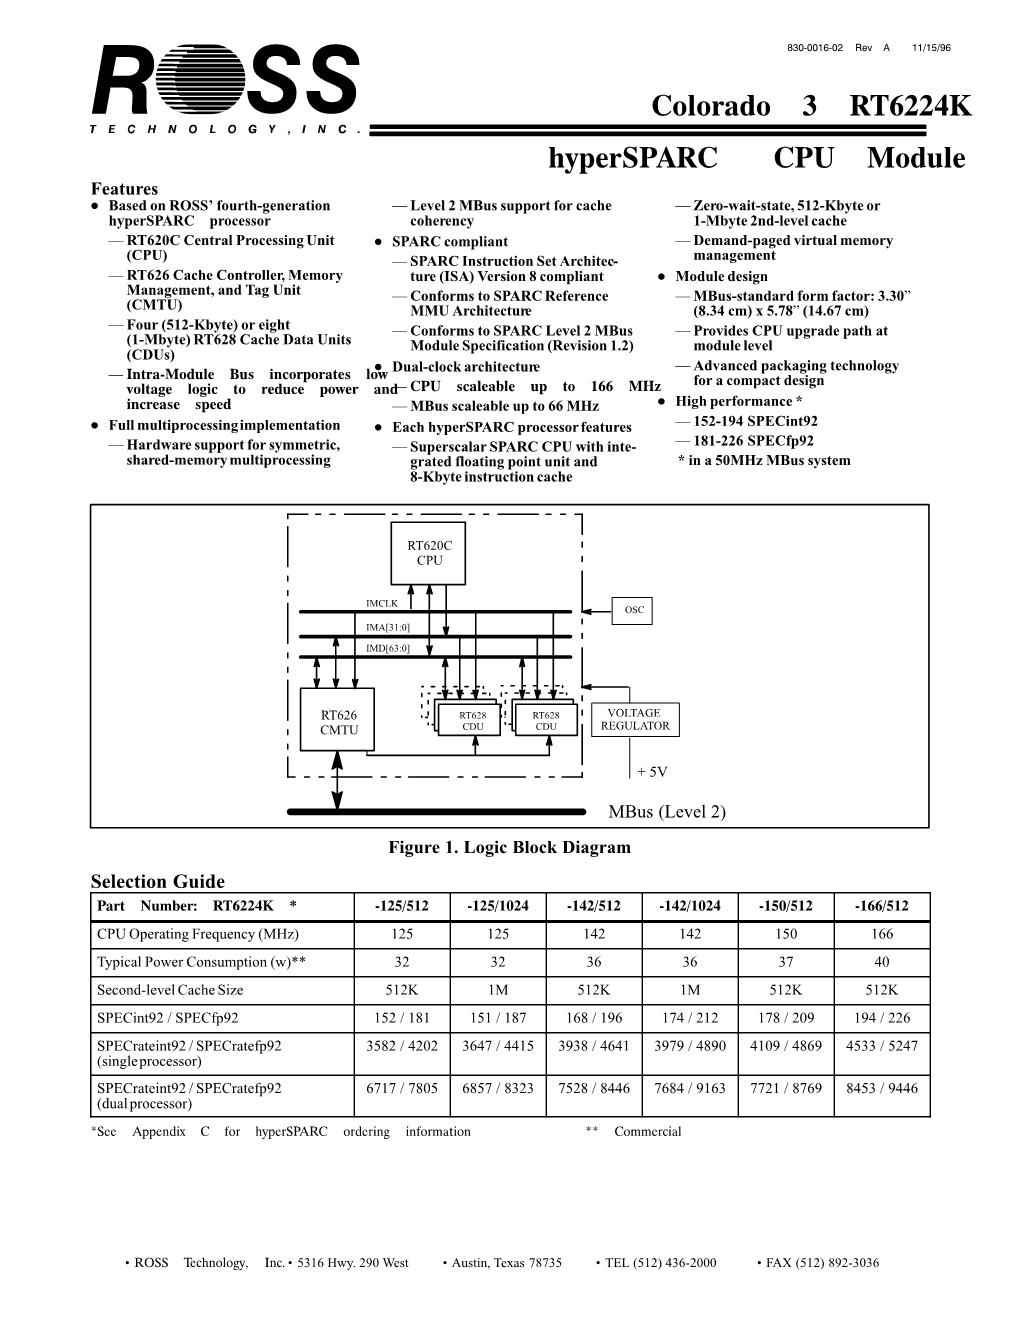 Colorado 3 RT6224K Hypersparc™ CPU Module